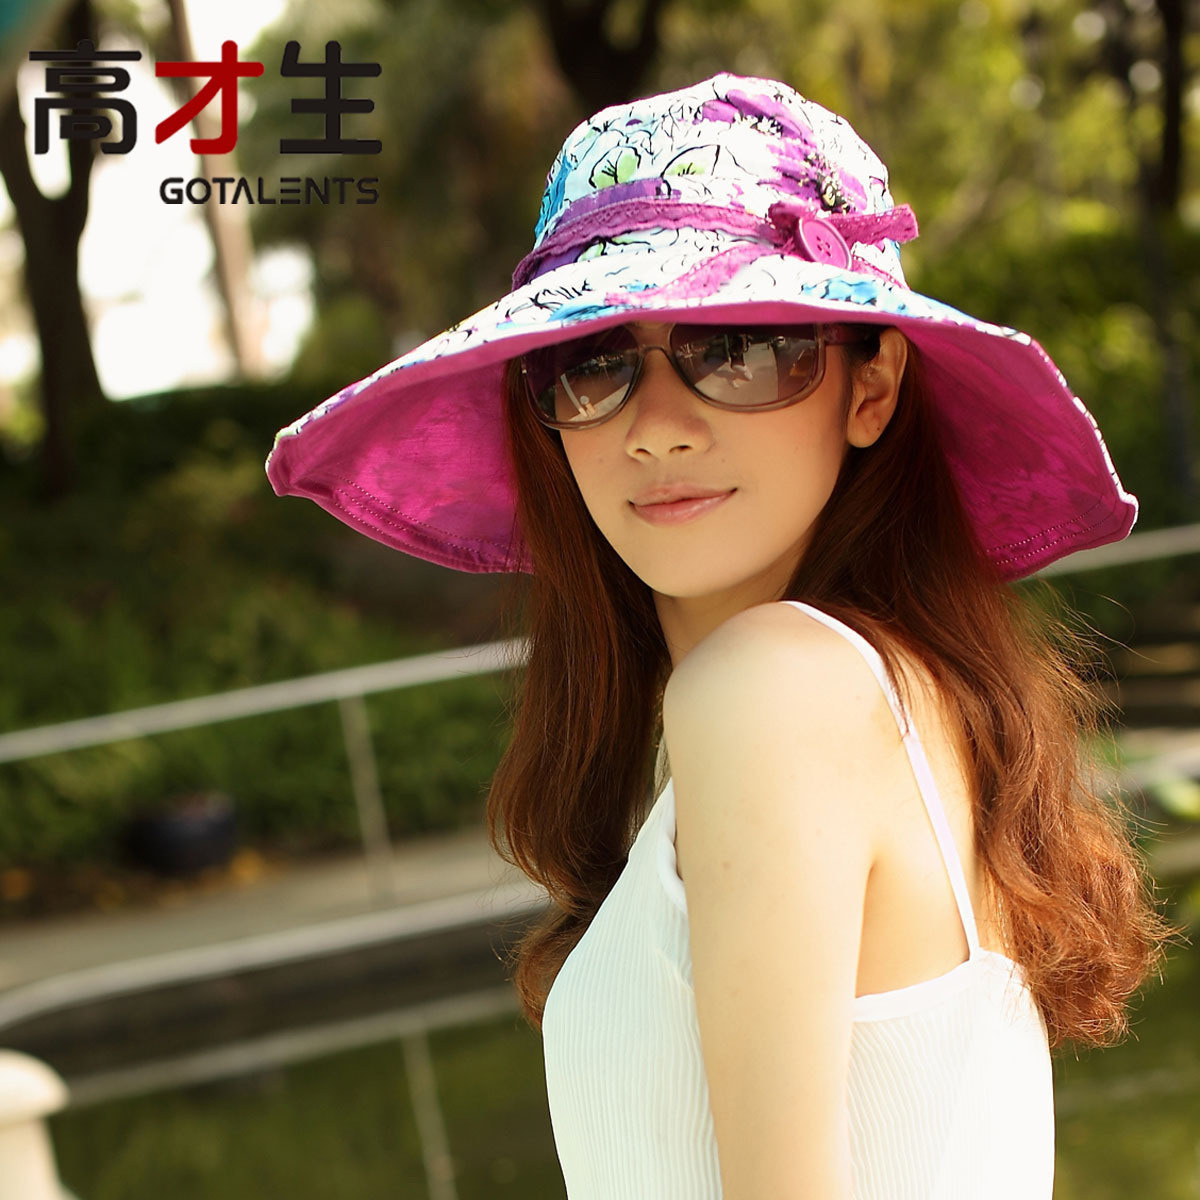 Cloth cap women's outdoor summer sun hat large-brimmed sunbonnet sun hat